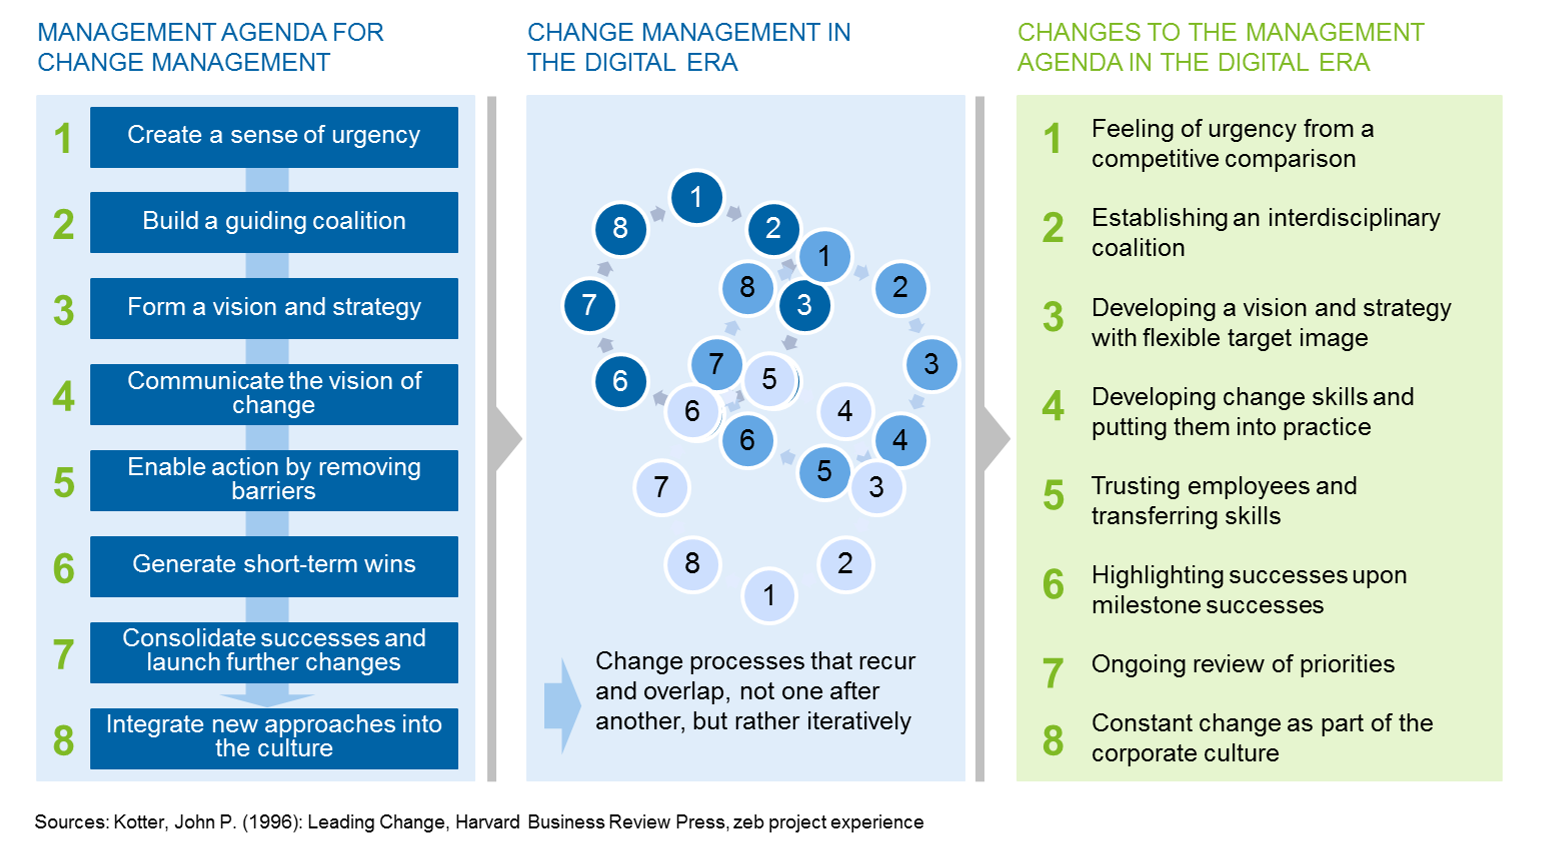 Change management in the digital era